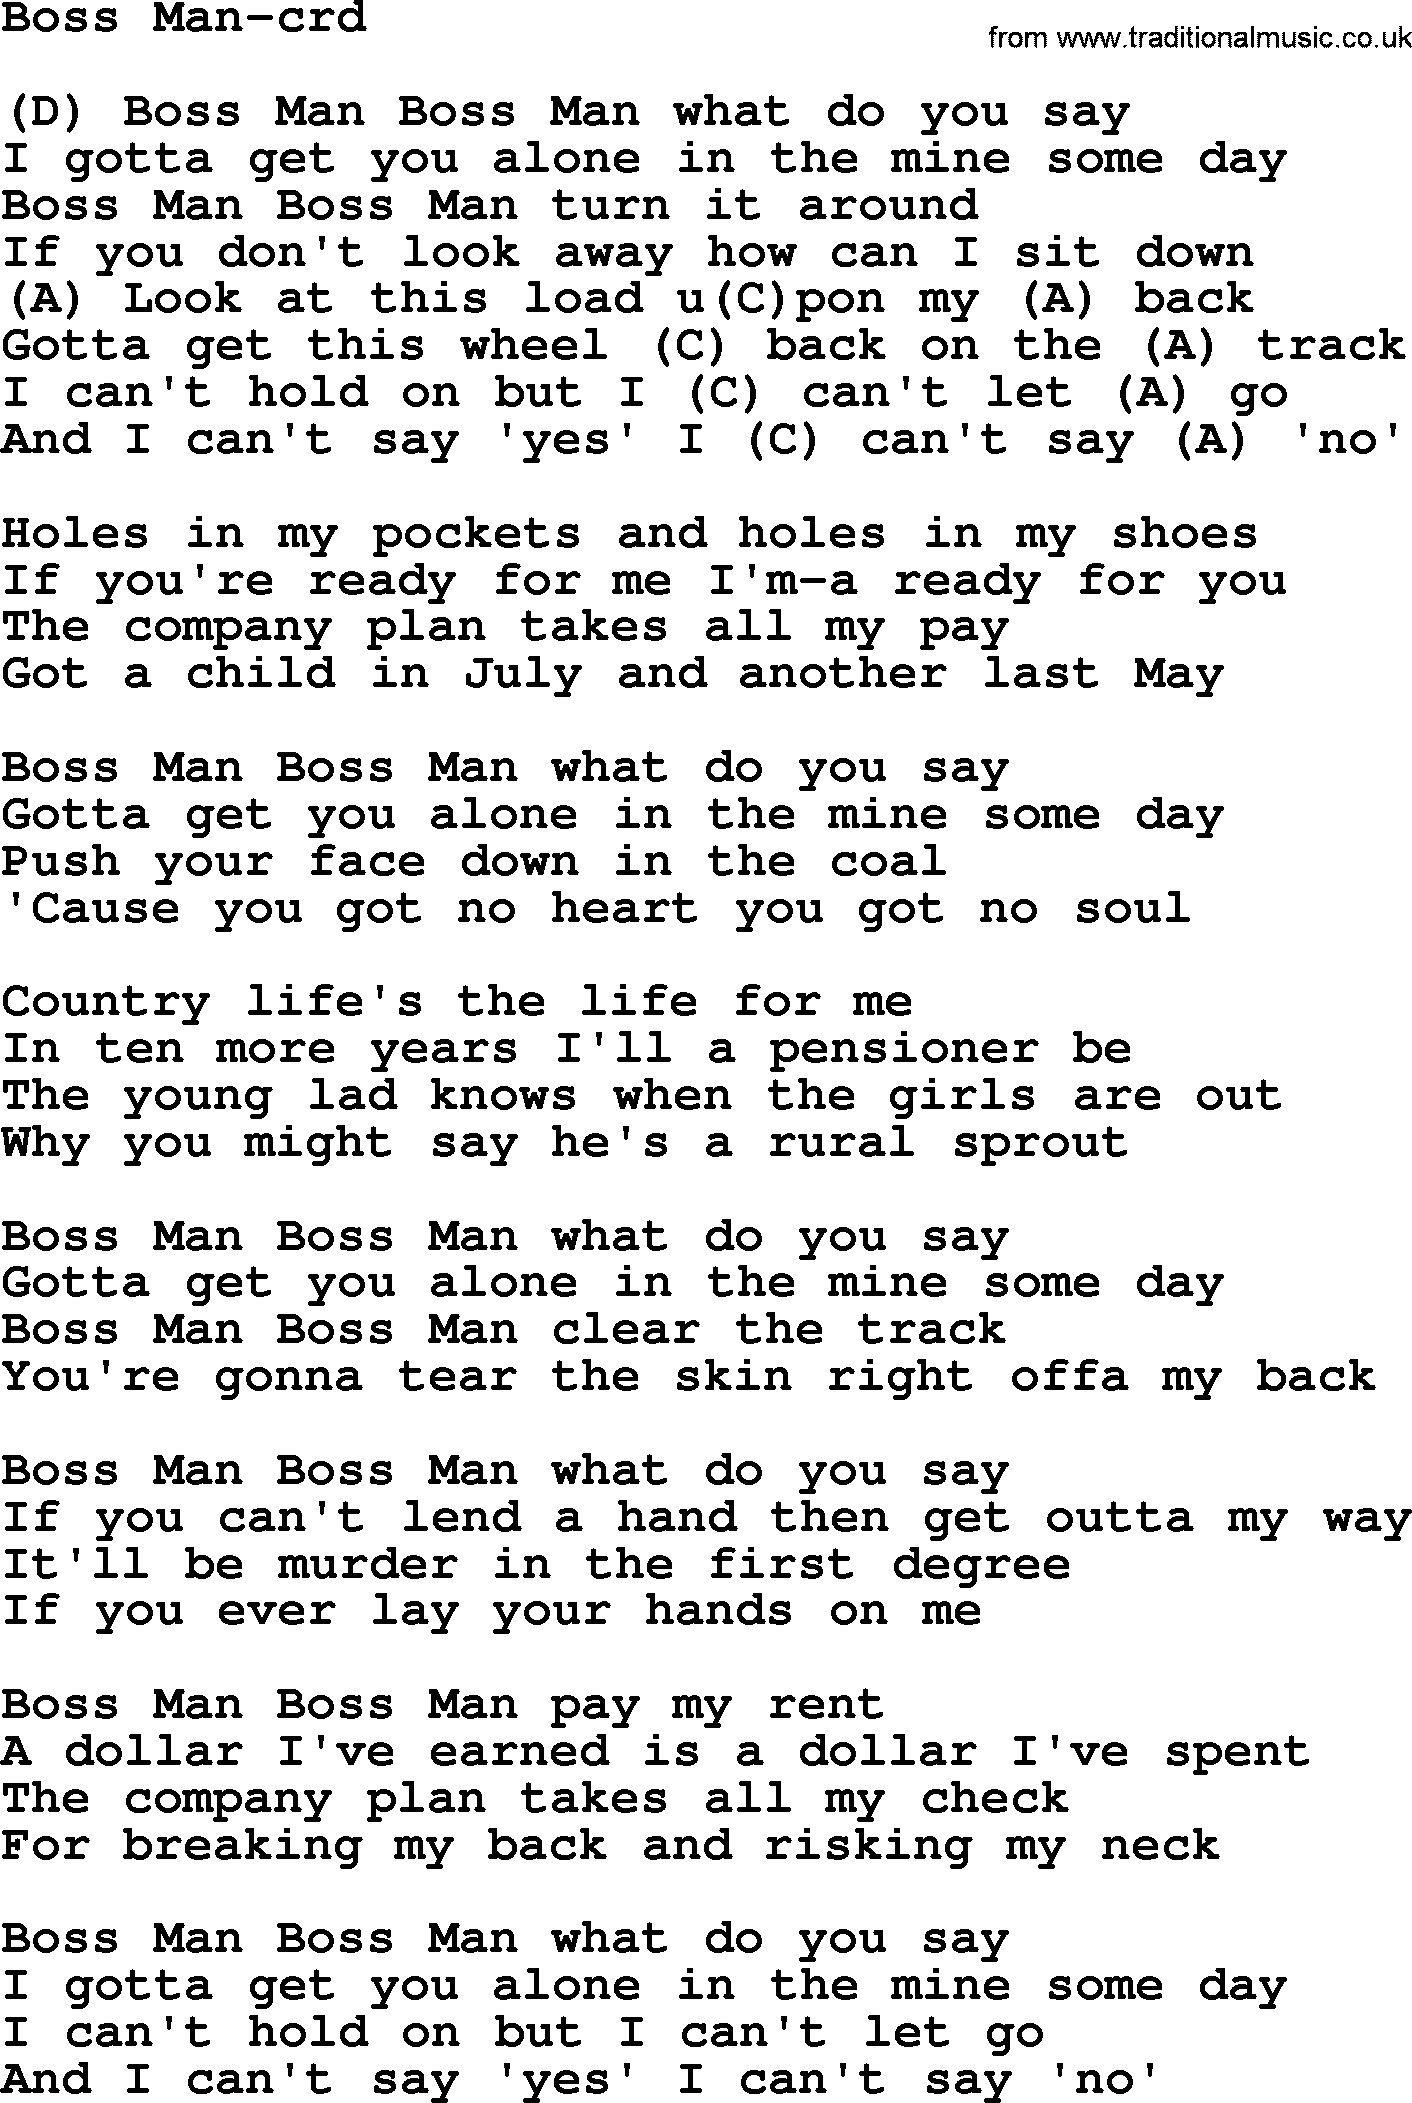 Gordon Lightfoot song Boss Man, lyrics and chords